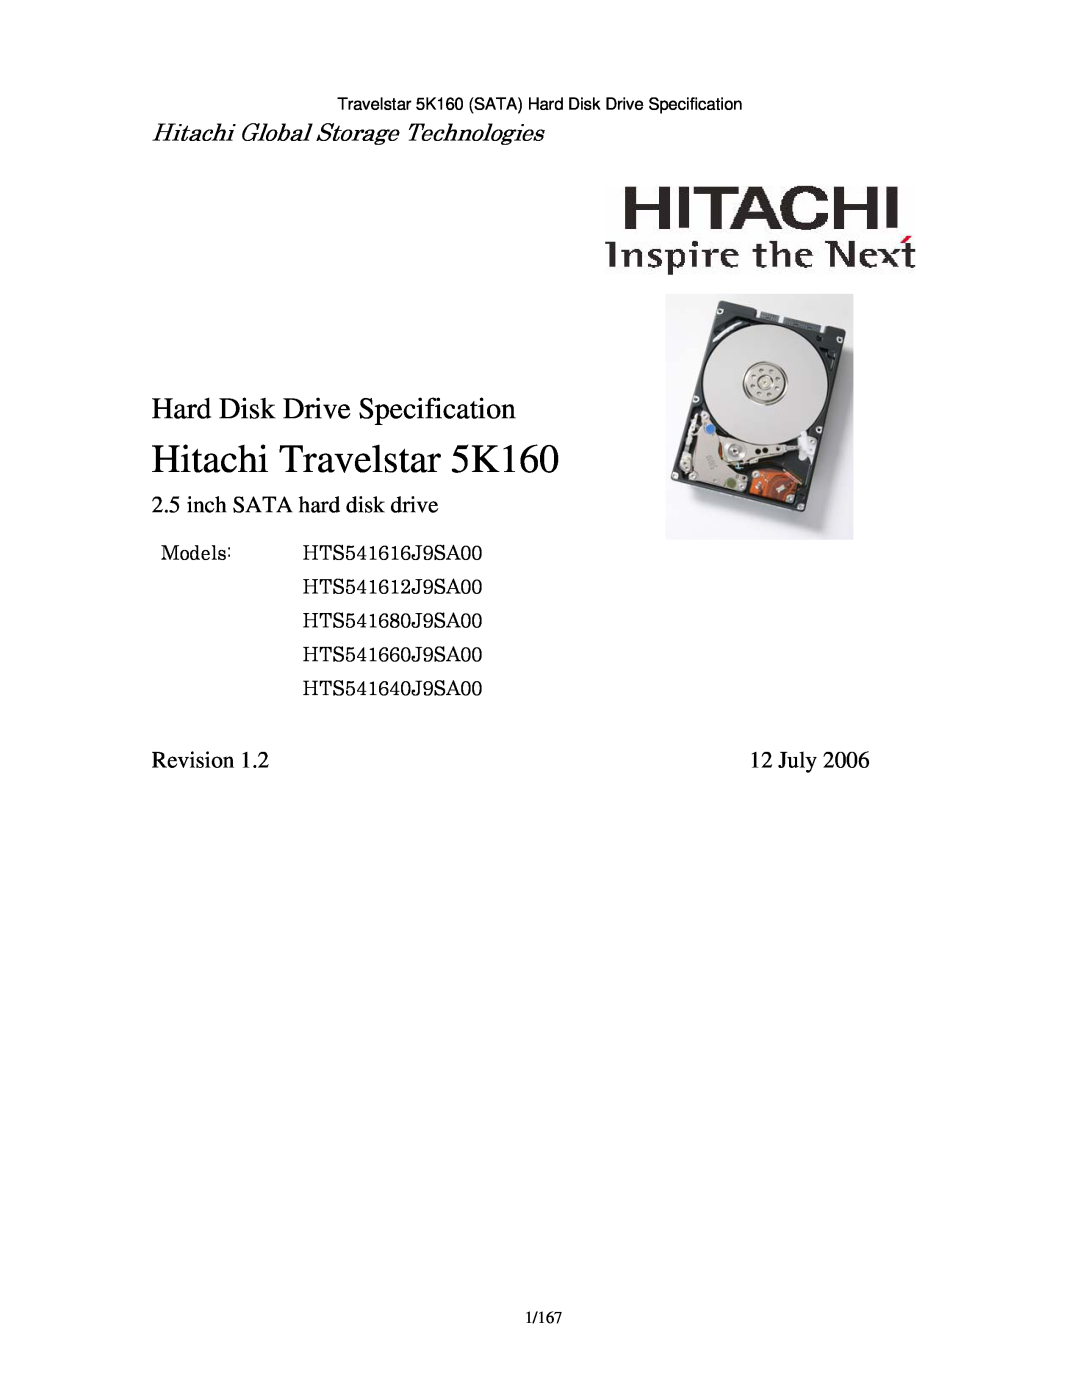 Hitachi HTS541680J9SA00 manual Hitachi Travelstar 5K160, Hard Disk Drive Specification, inch SATA hard disk drive, July 